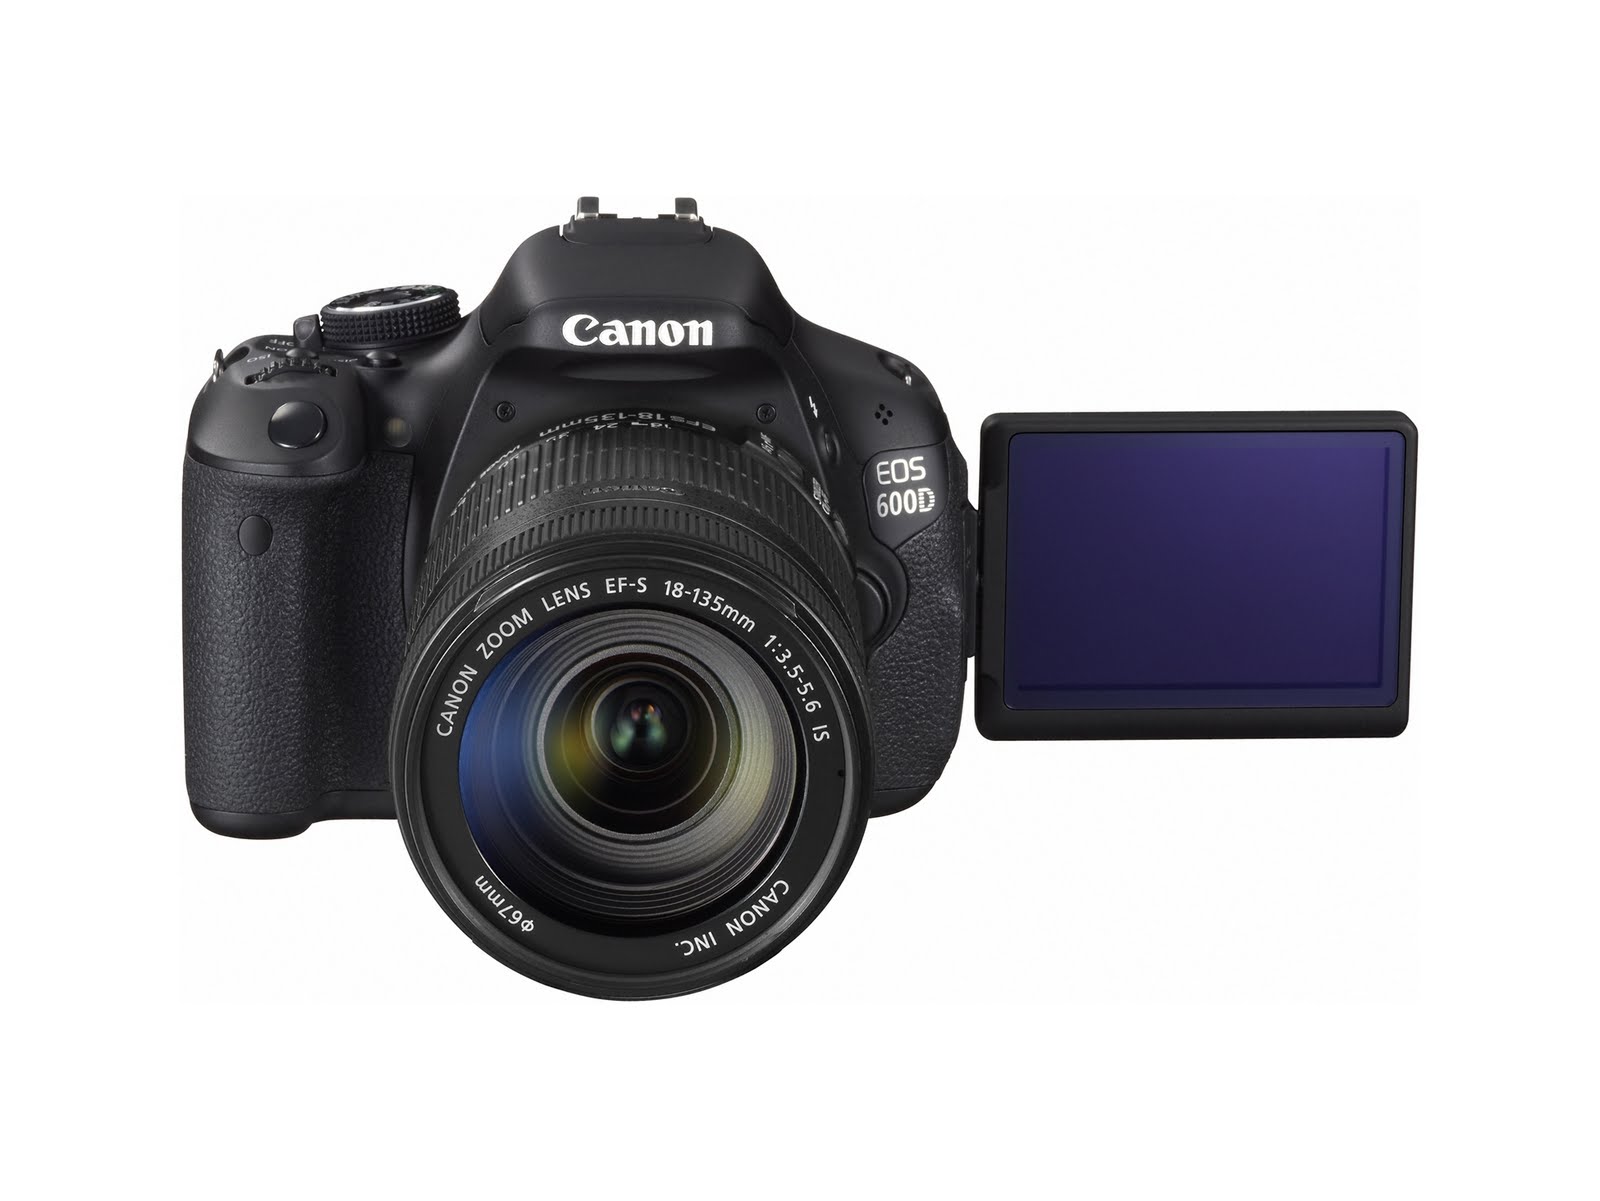  Canon EOS 600D  Rebel T3i DSLR Technical Specs